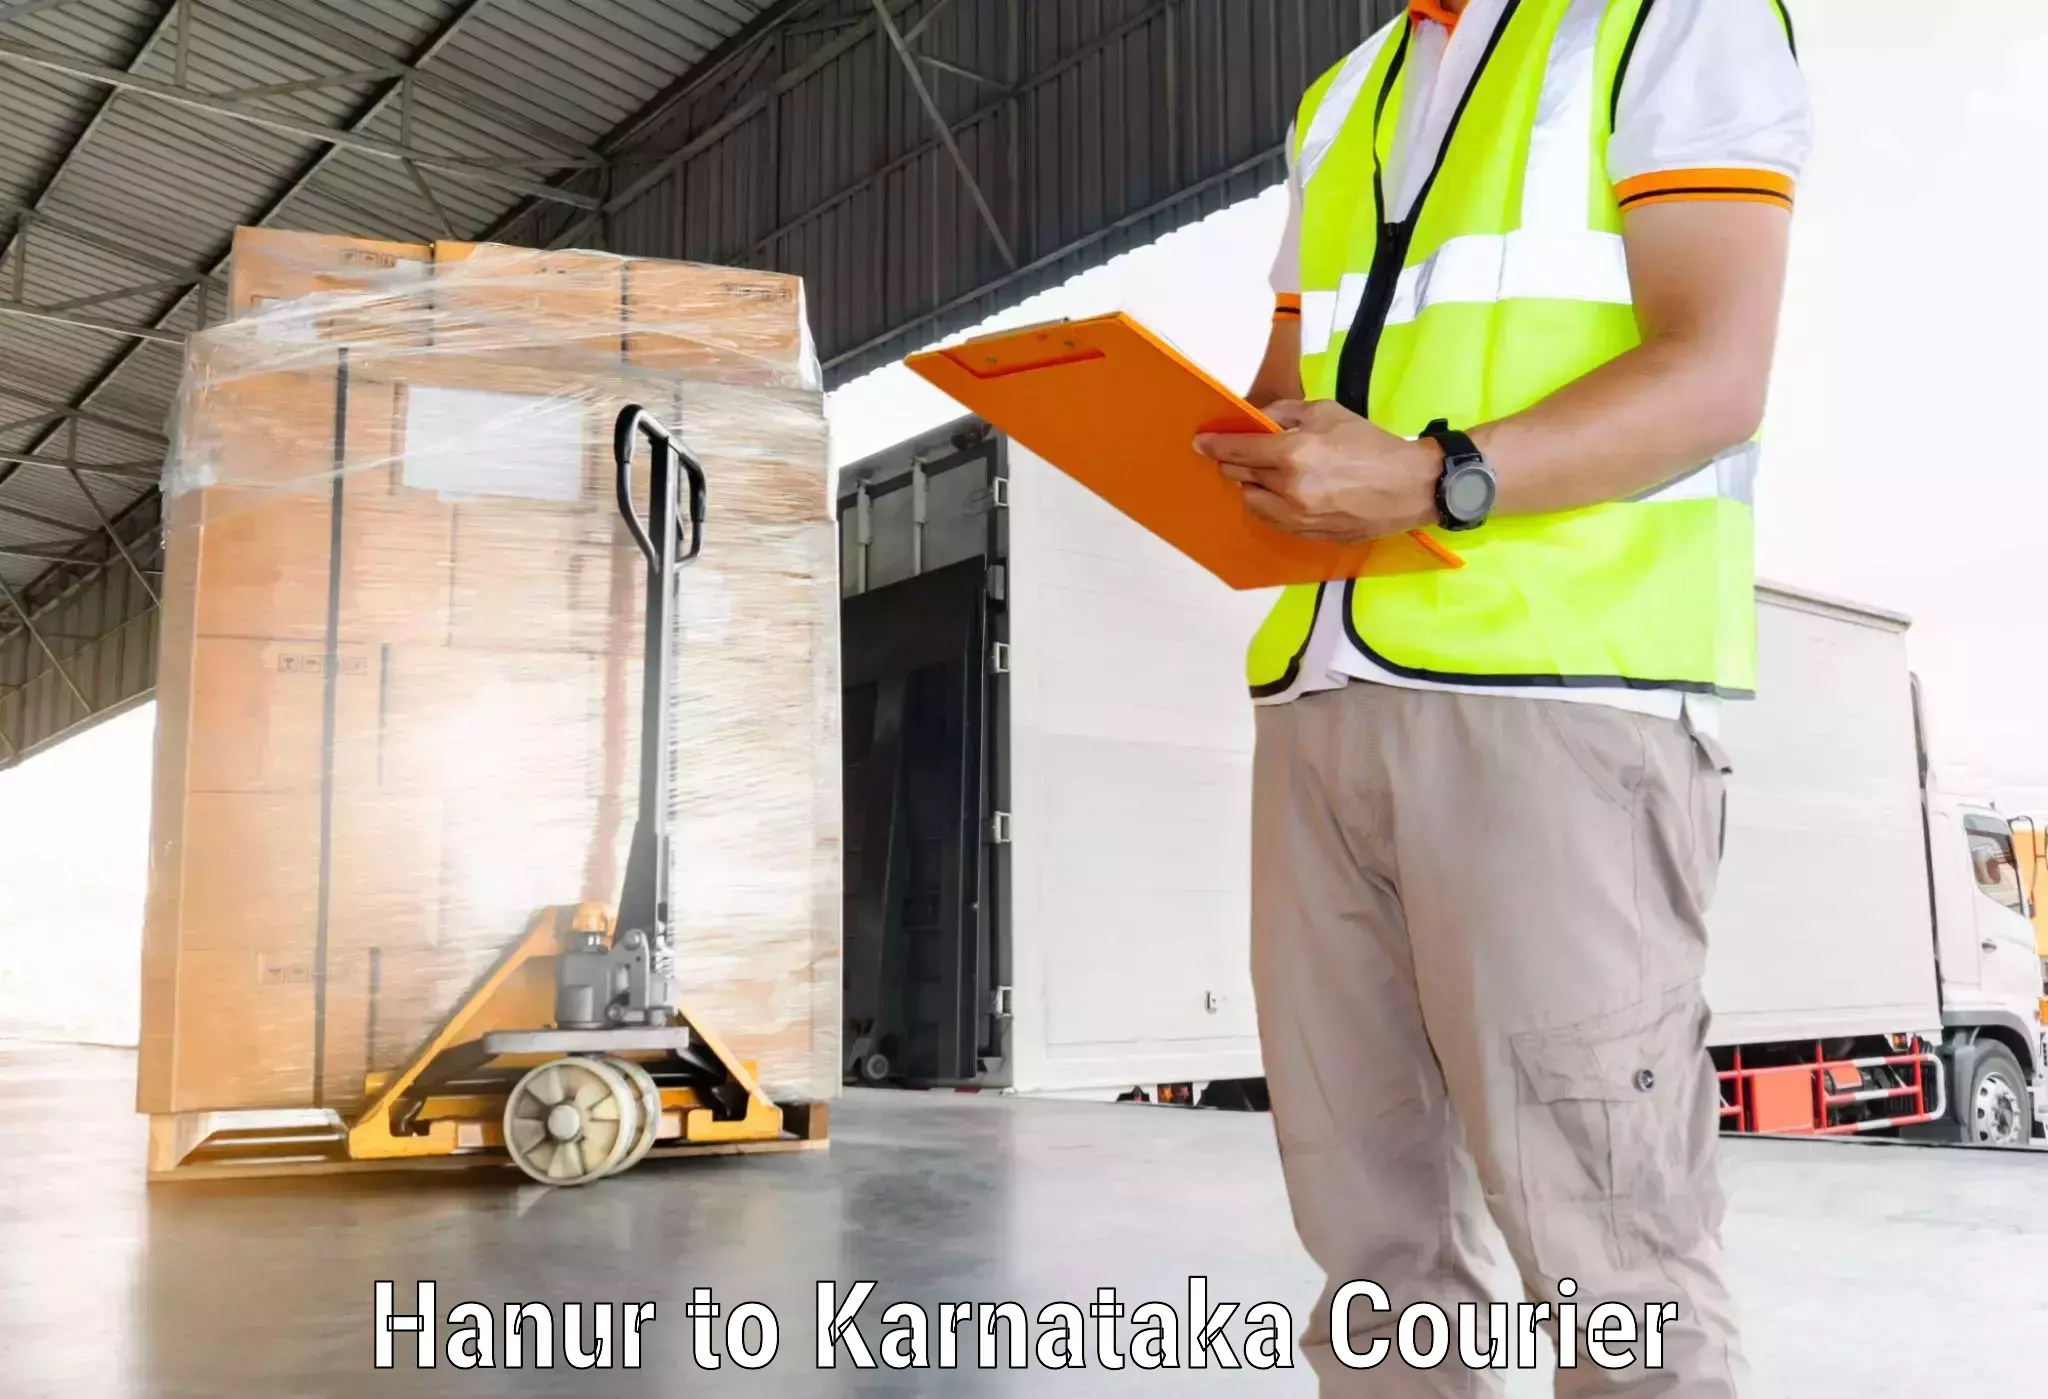 Courier service innovation Hanur to Tikota